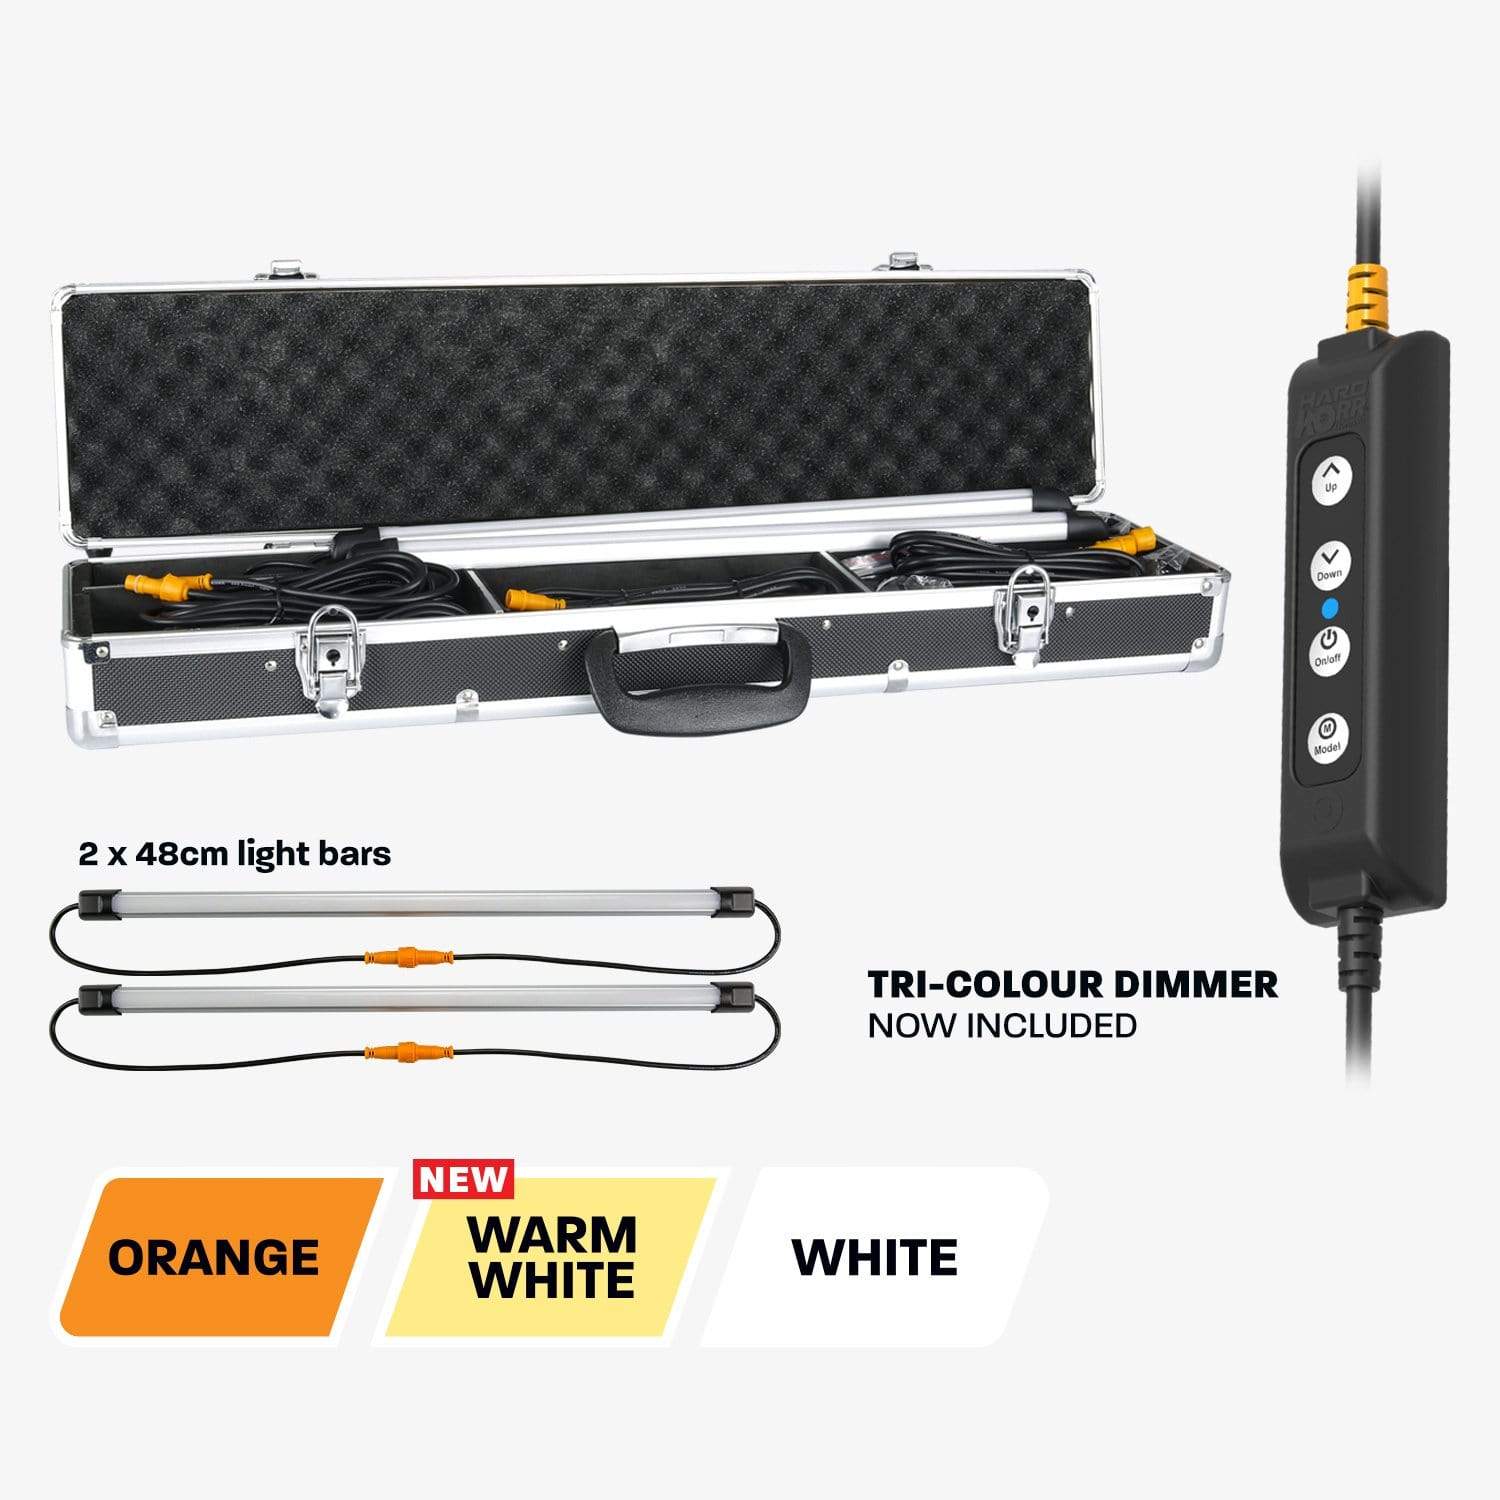 48cm Tri-Colour LED Light Bar Kit with Diffuser - Hardkorr USA